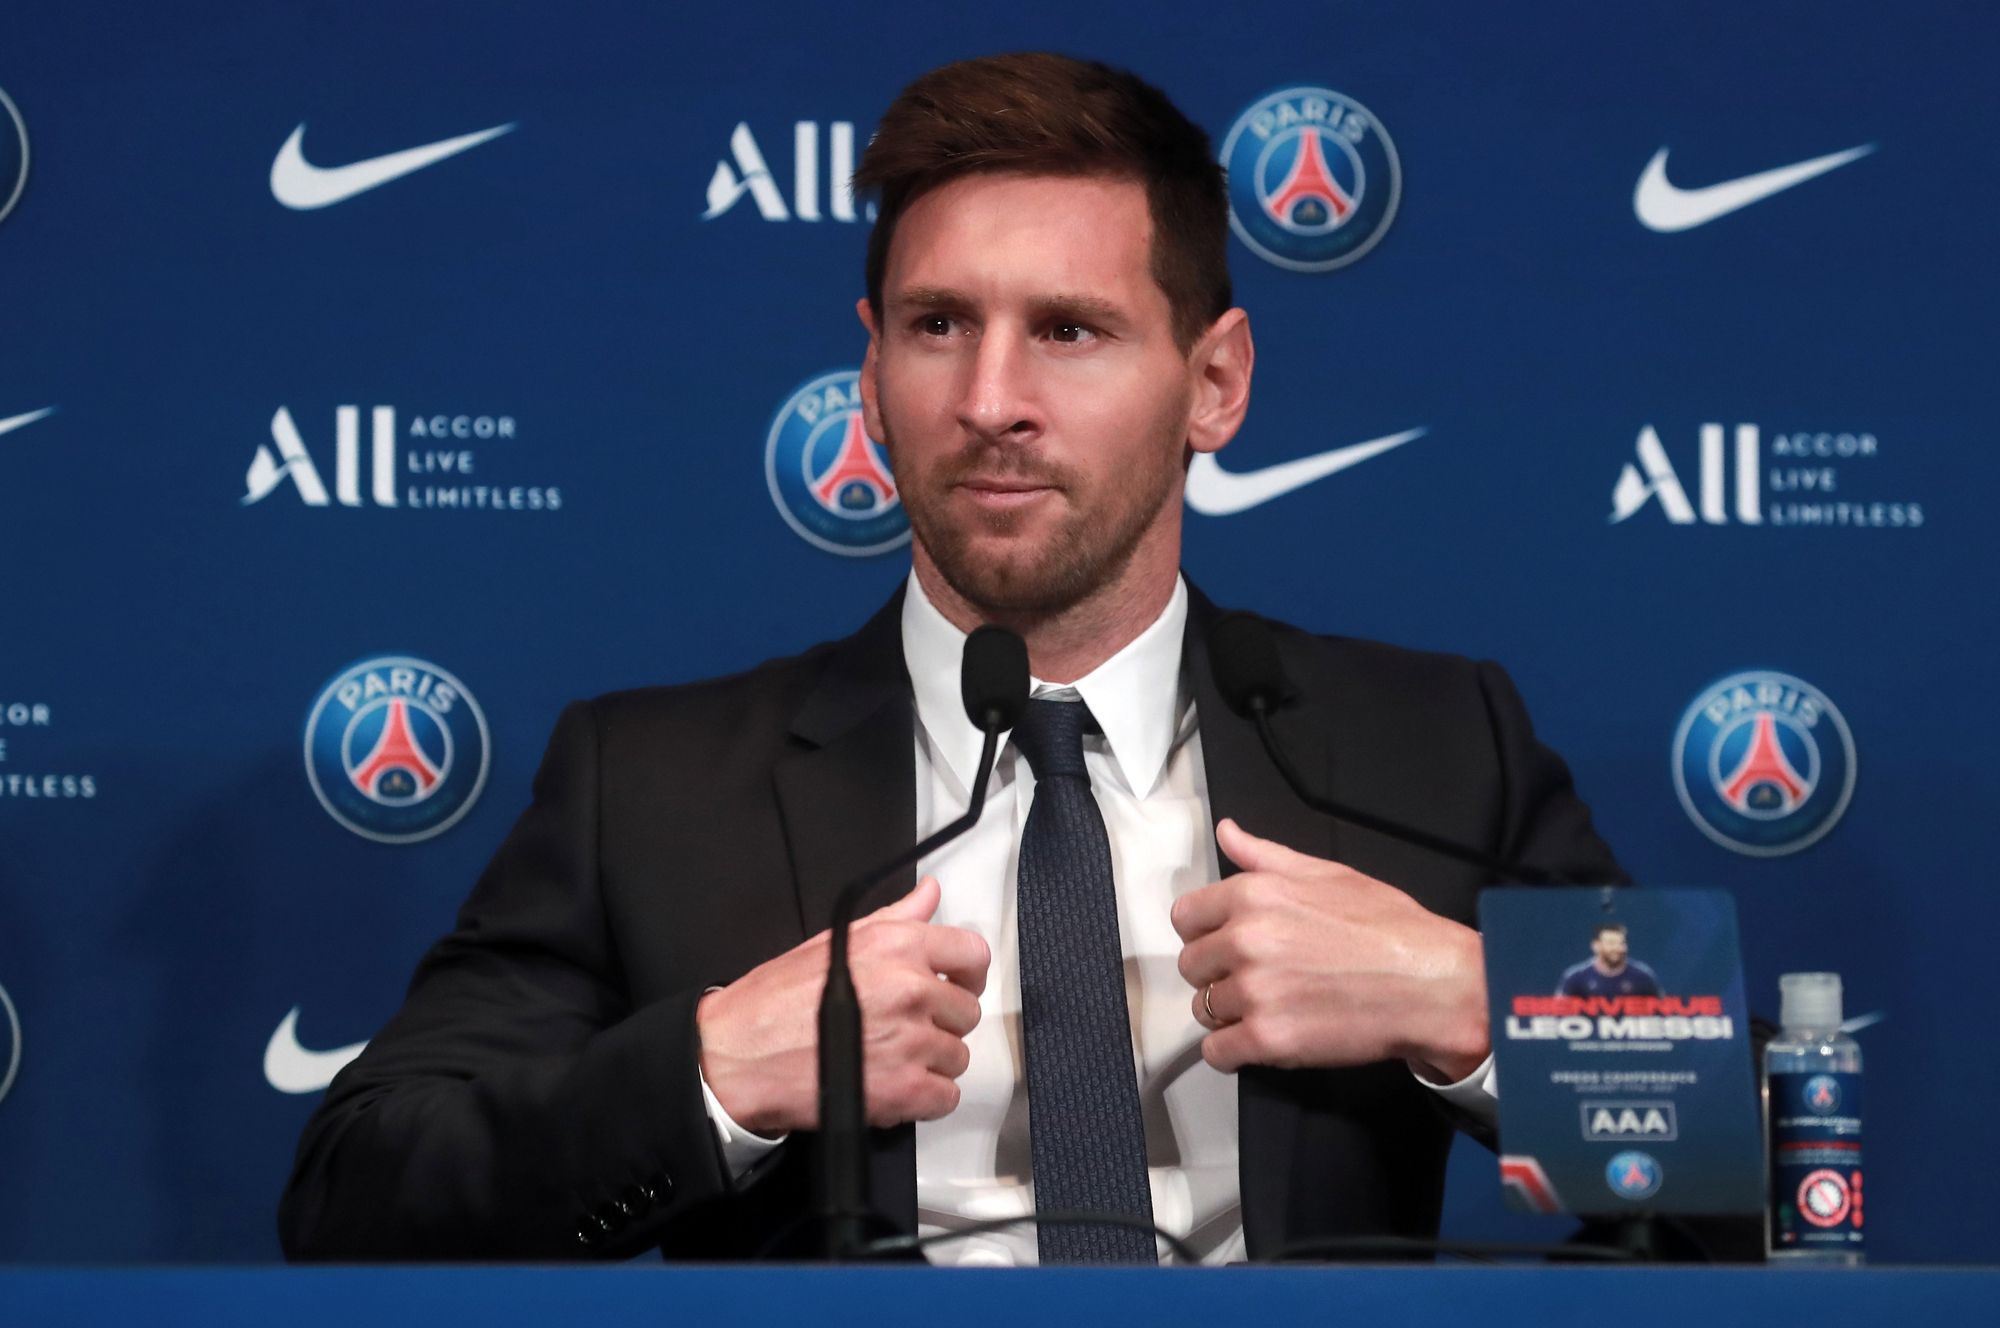 A Paris Saint-Germain labdarúgóklubhoz szerződött Lionel Messi a párizsi Parc des Princes stadionban  / Fotó: MTI/EPA/Christophe Petit Tesson